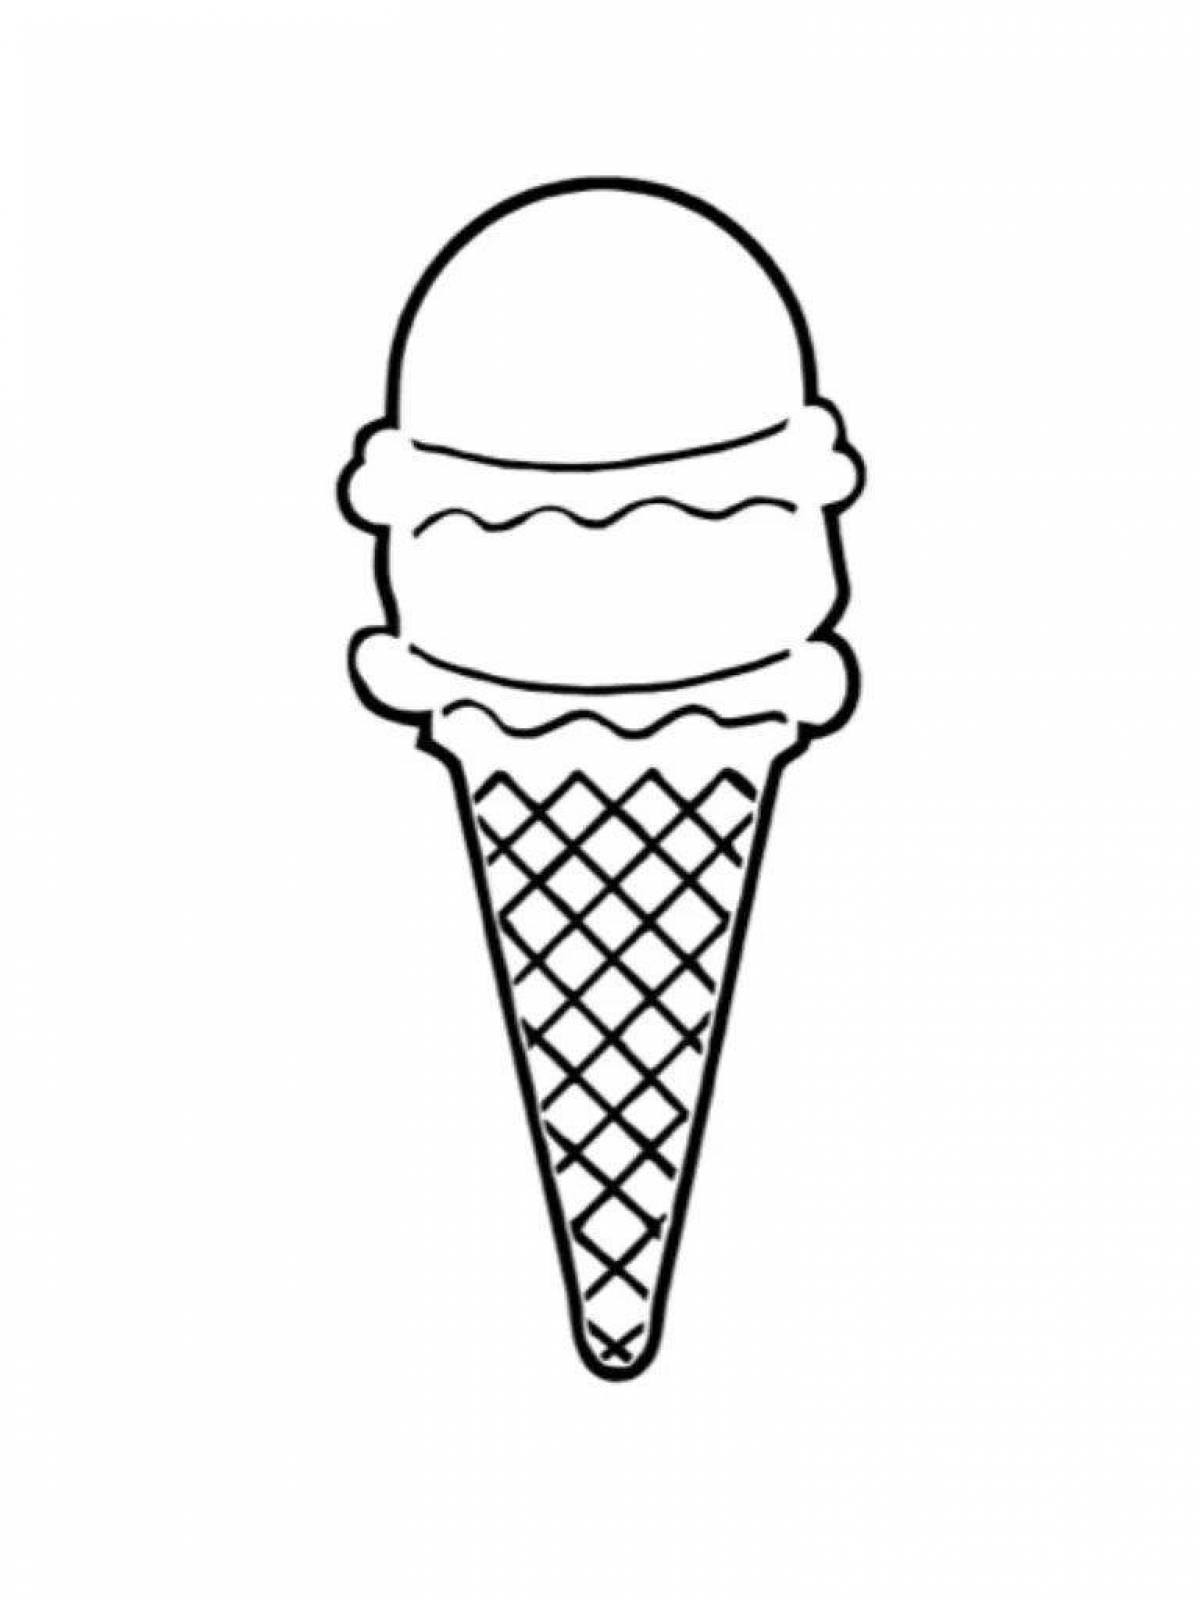 Coloring page happy ice cream cone